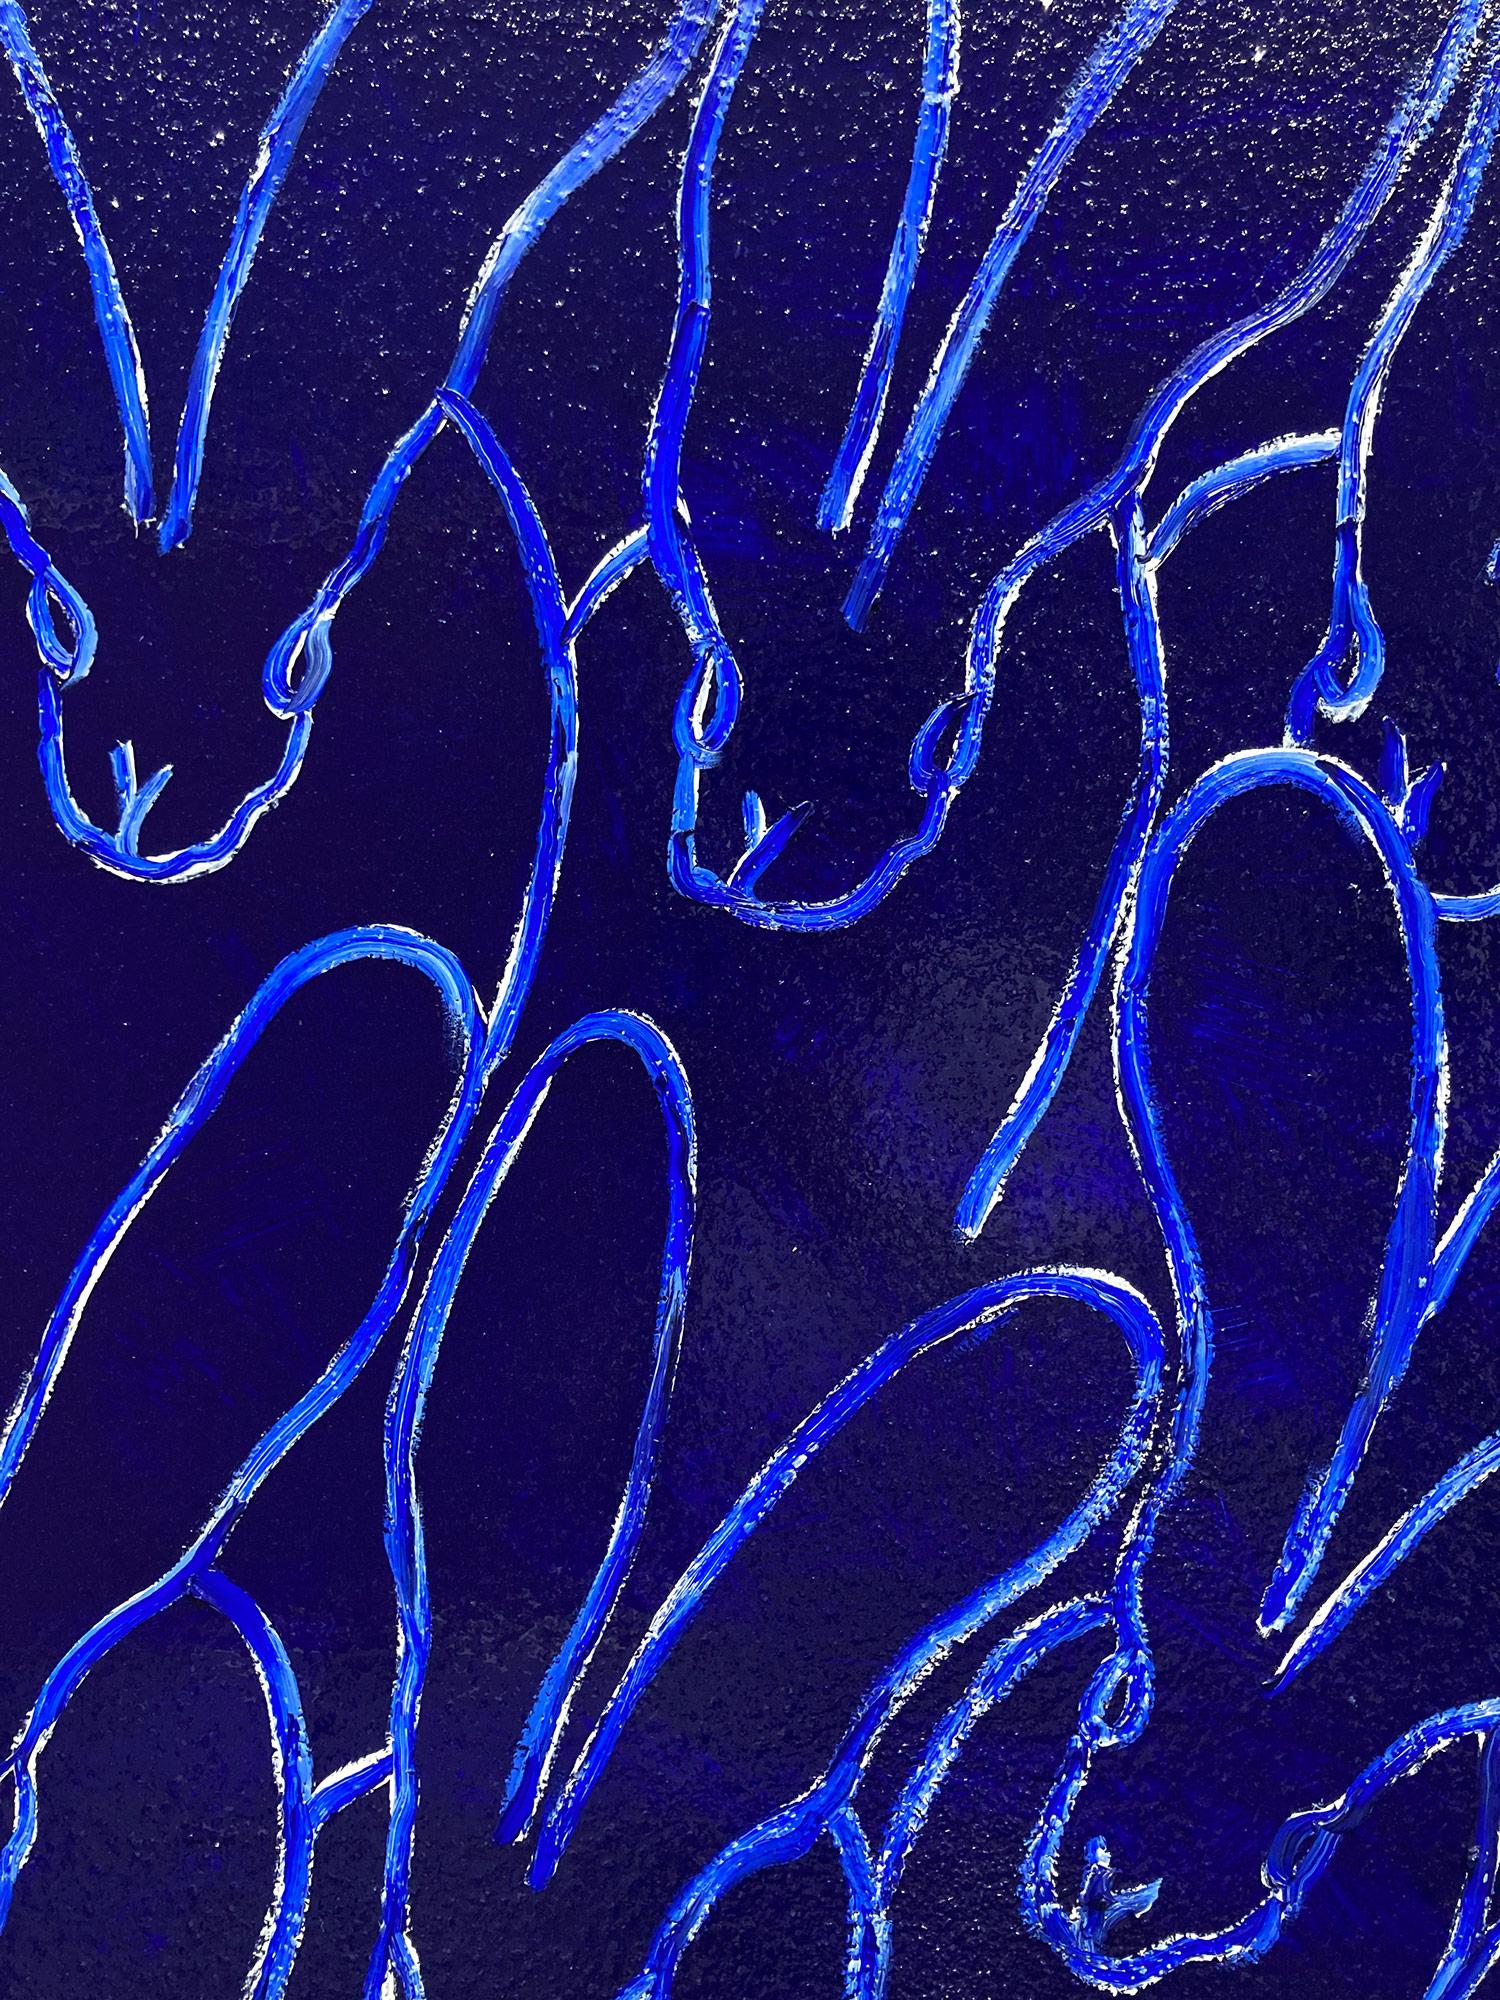 „Blue Diamond Double“ Diamant Staub Ultramarin Blau Ölgemälde Bunnies Leinwand – Painting von Hunt Slonem